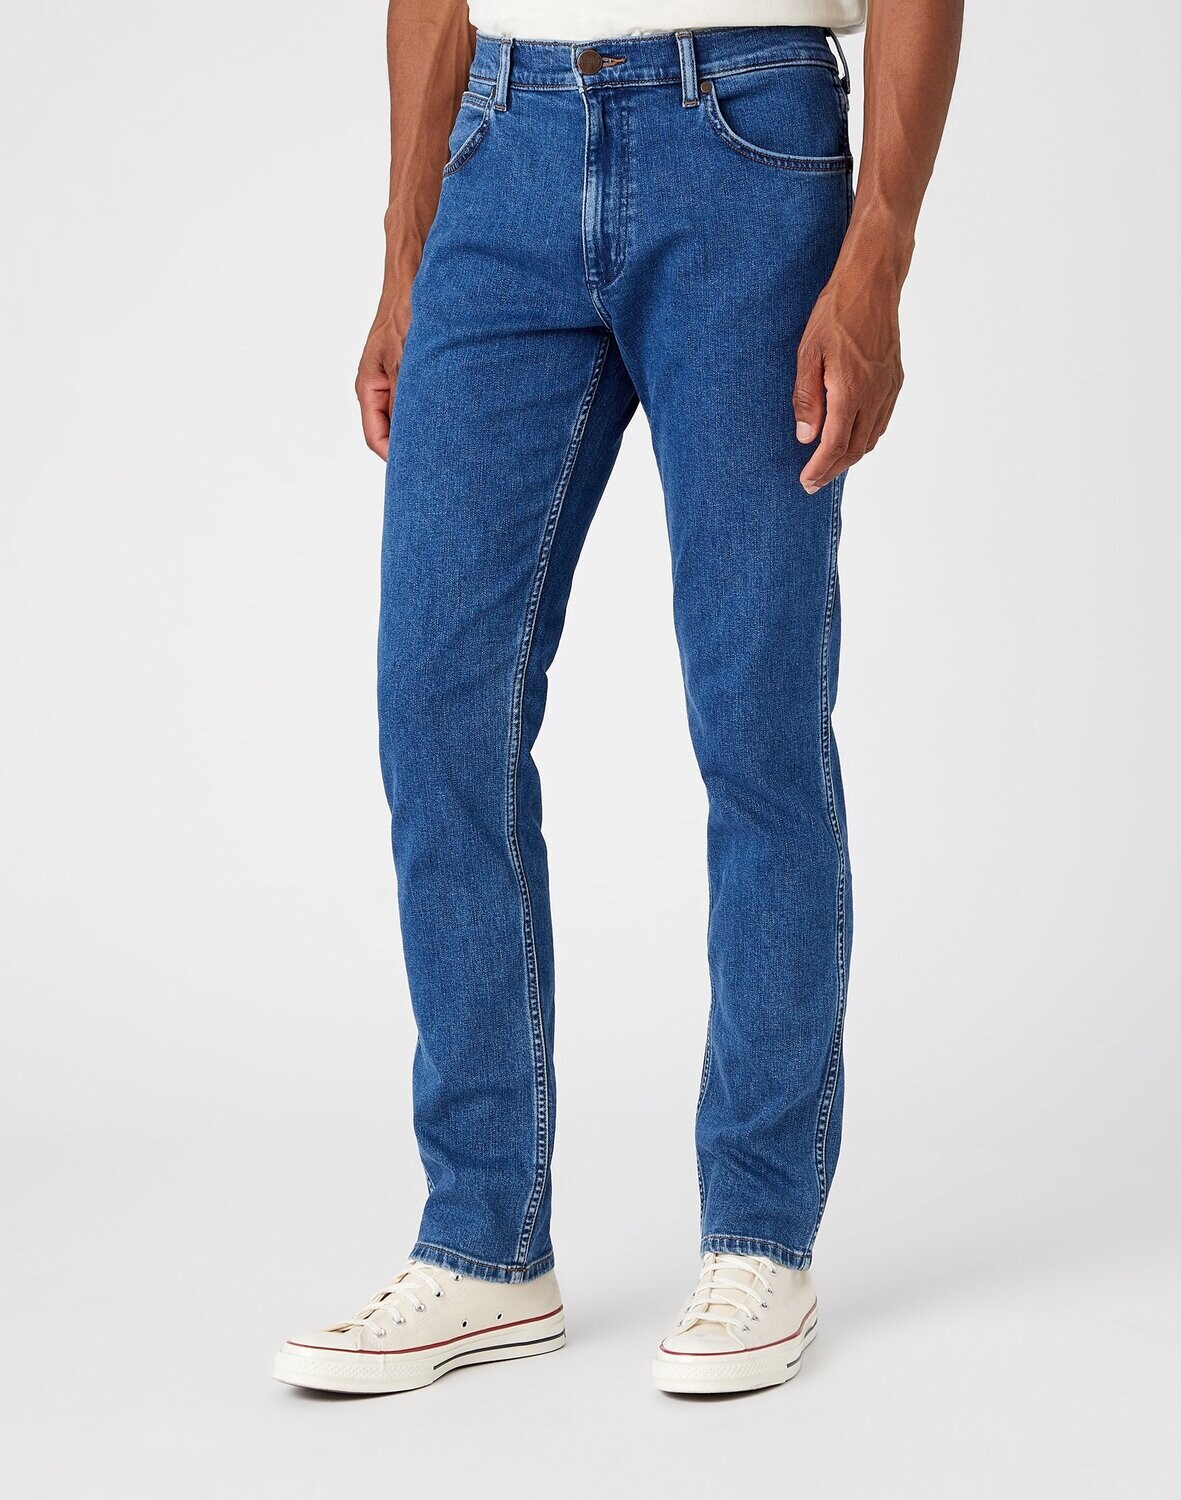 фото Джинсы мужские wrangler men greensboro jeans синие 38/36